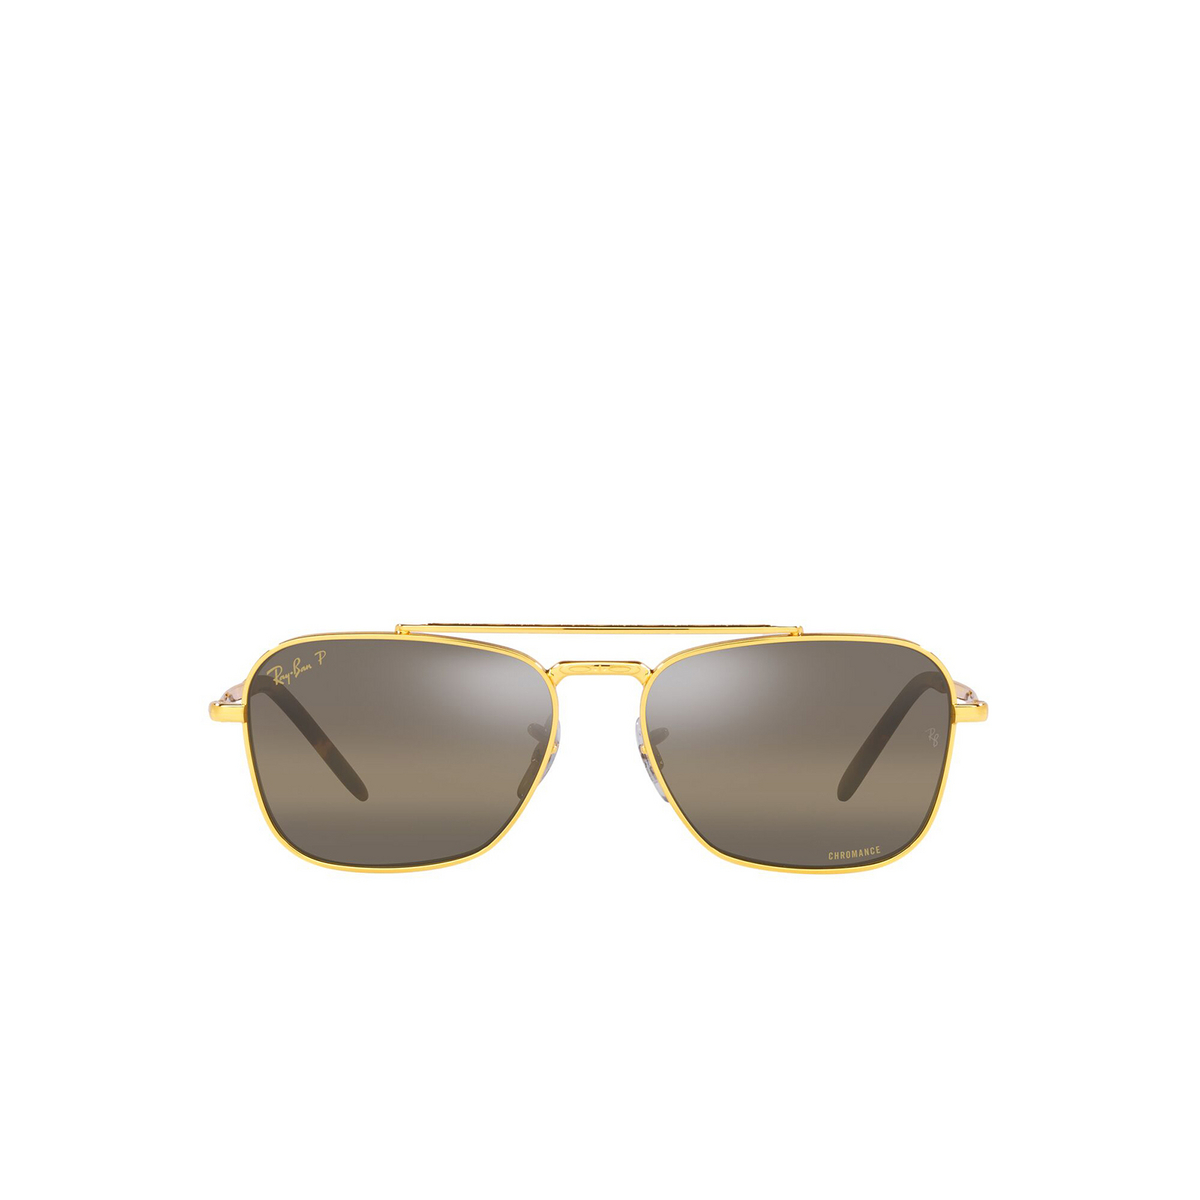 Ray-Ban NEW CARAVAN Sunglasses 9196G5 Legend Gold - front view